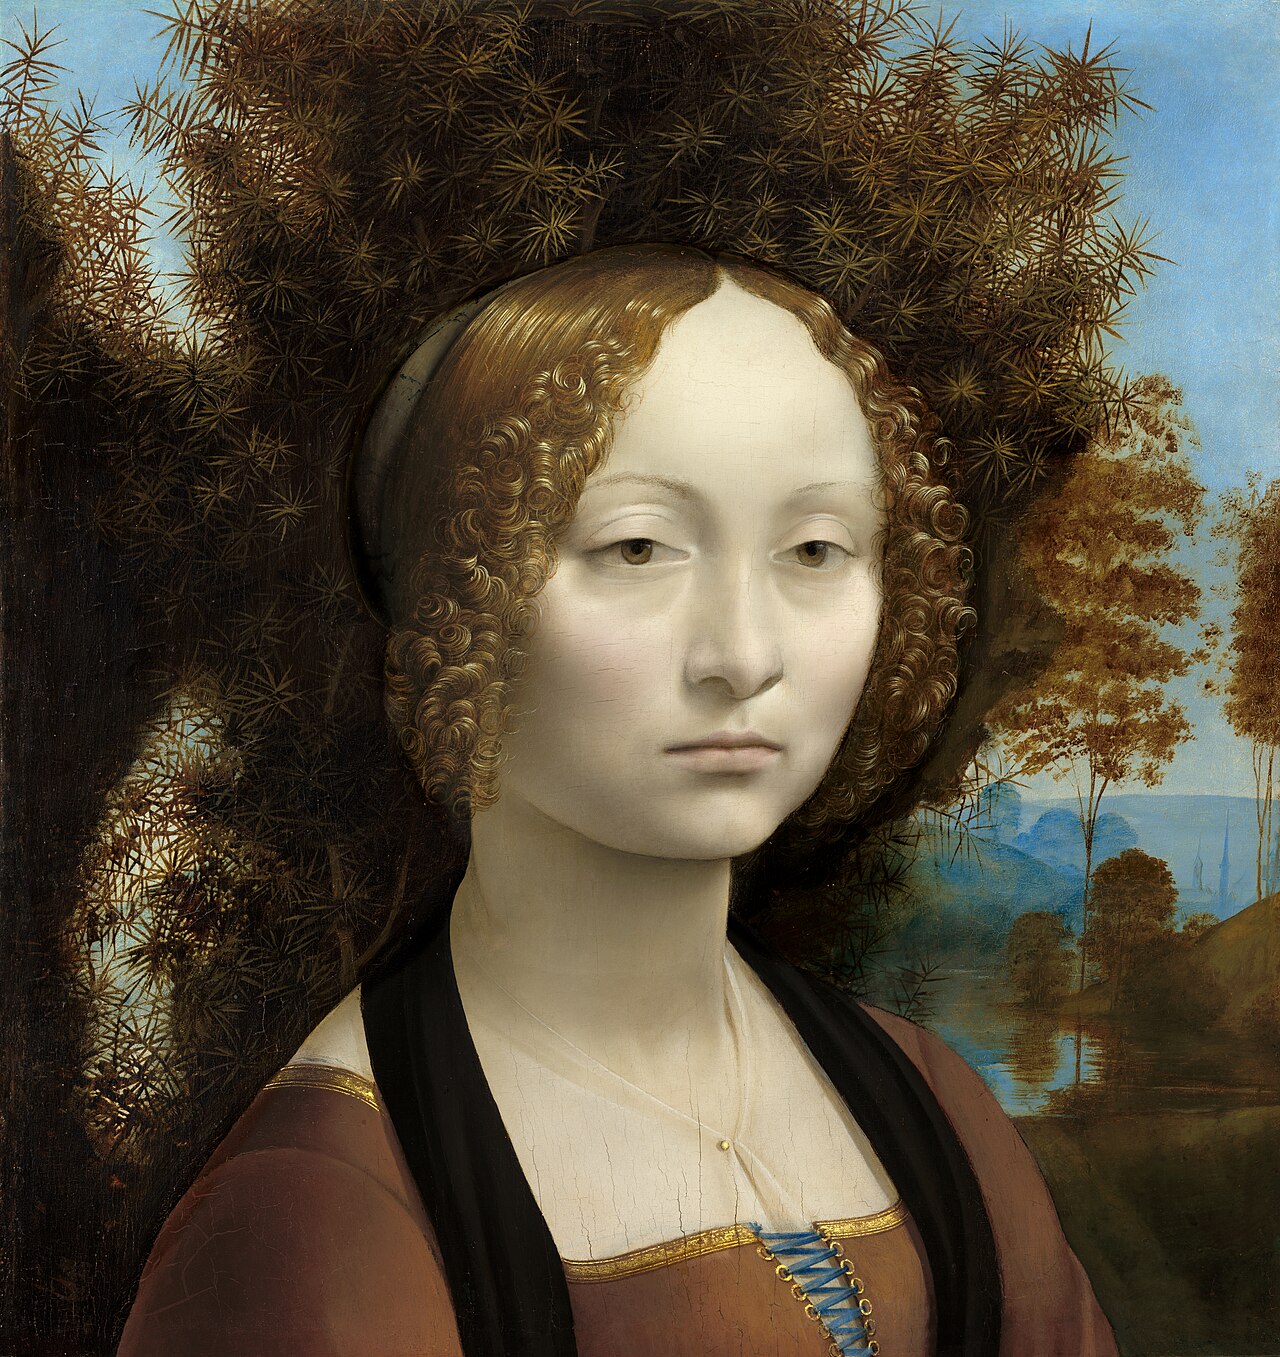 Ginevra de' Benci by Leonardo da Vinci - c. 1474–1478 - 38.1 × 37 cm National Gallery of Art